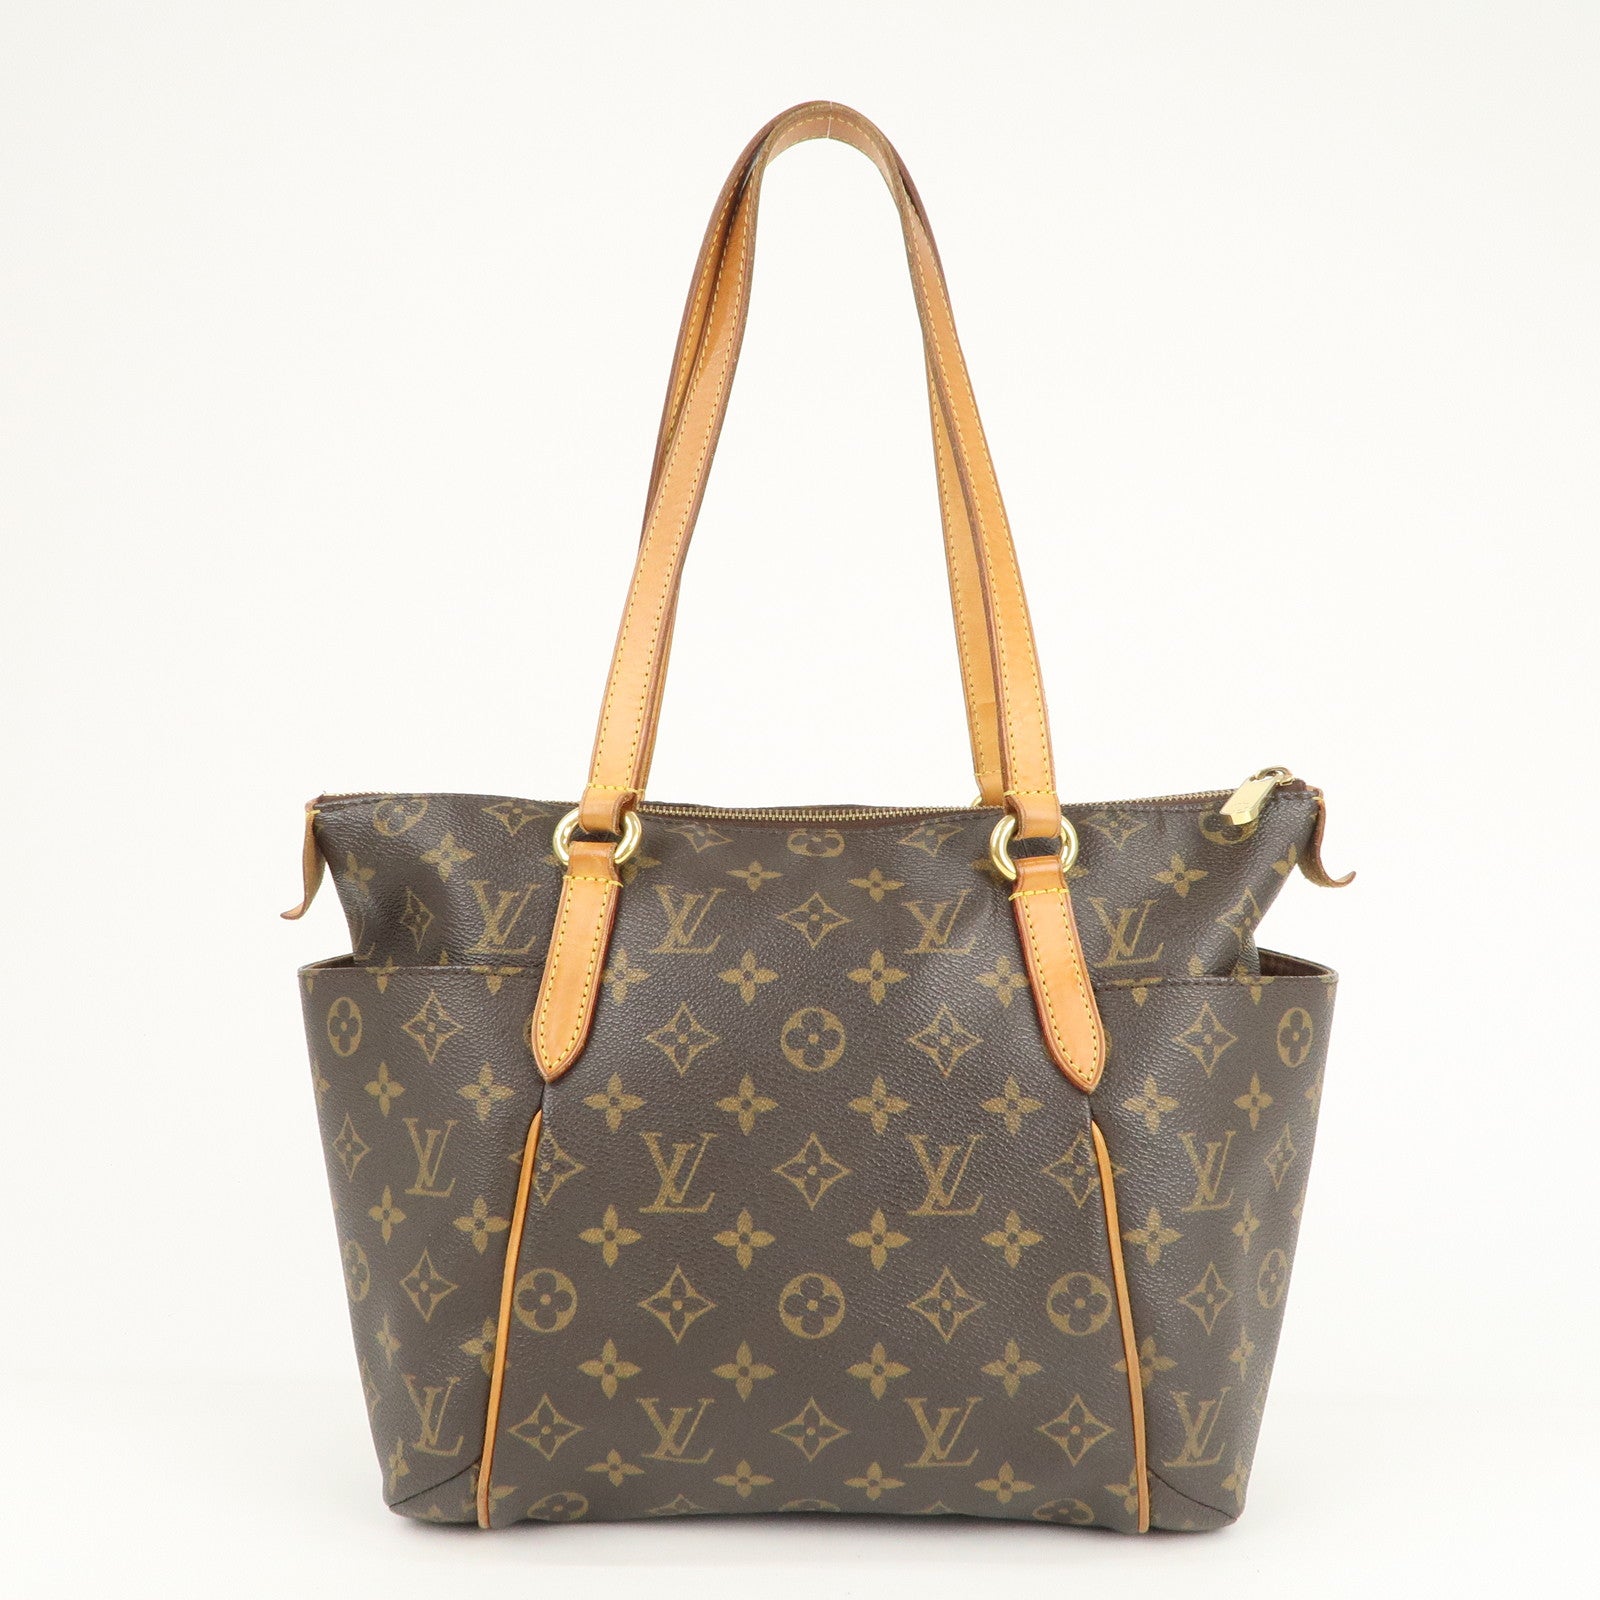 Tote - Shoulder - PM - Vuitton - Louis - Monogram - Bag - Totally